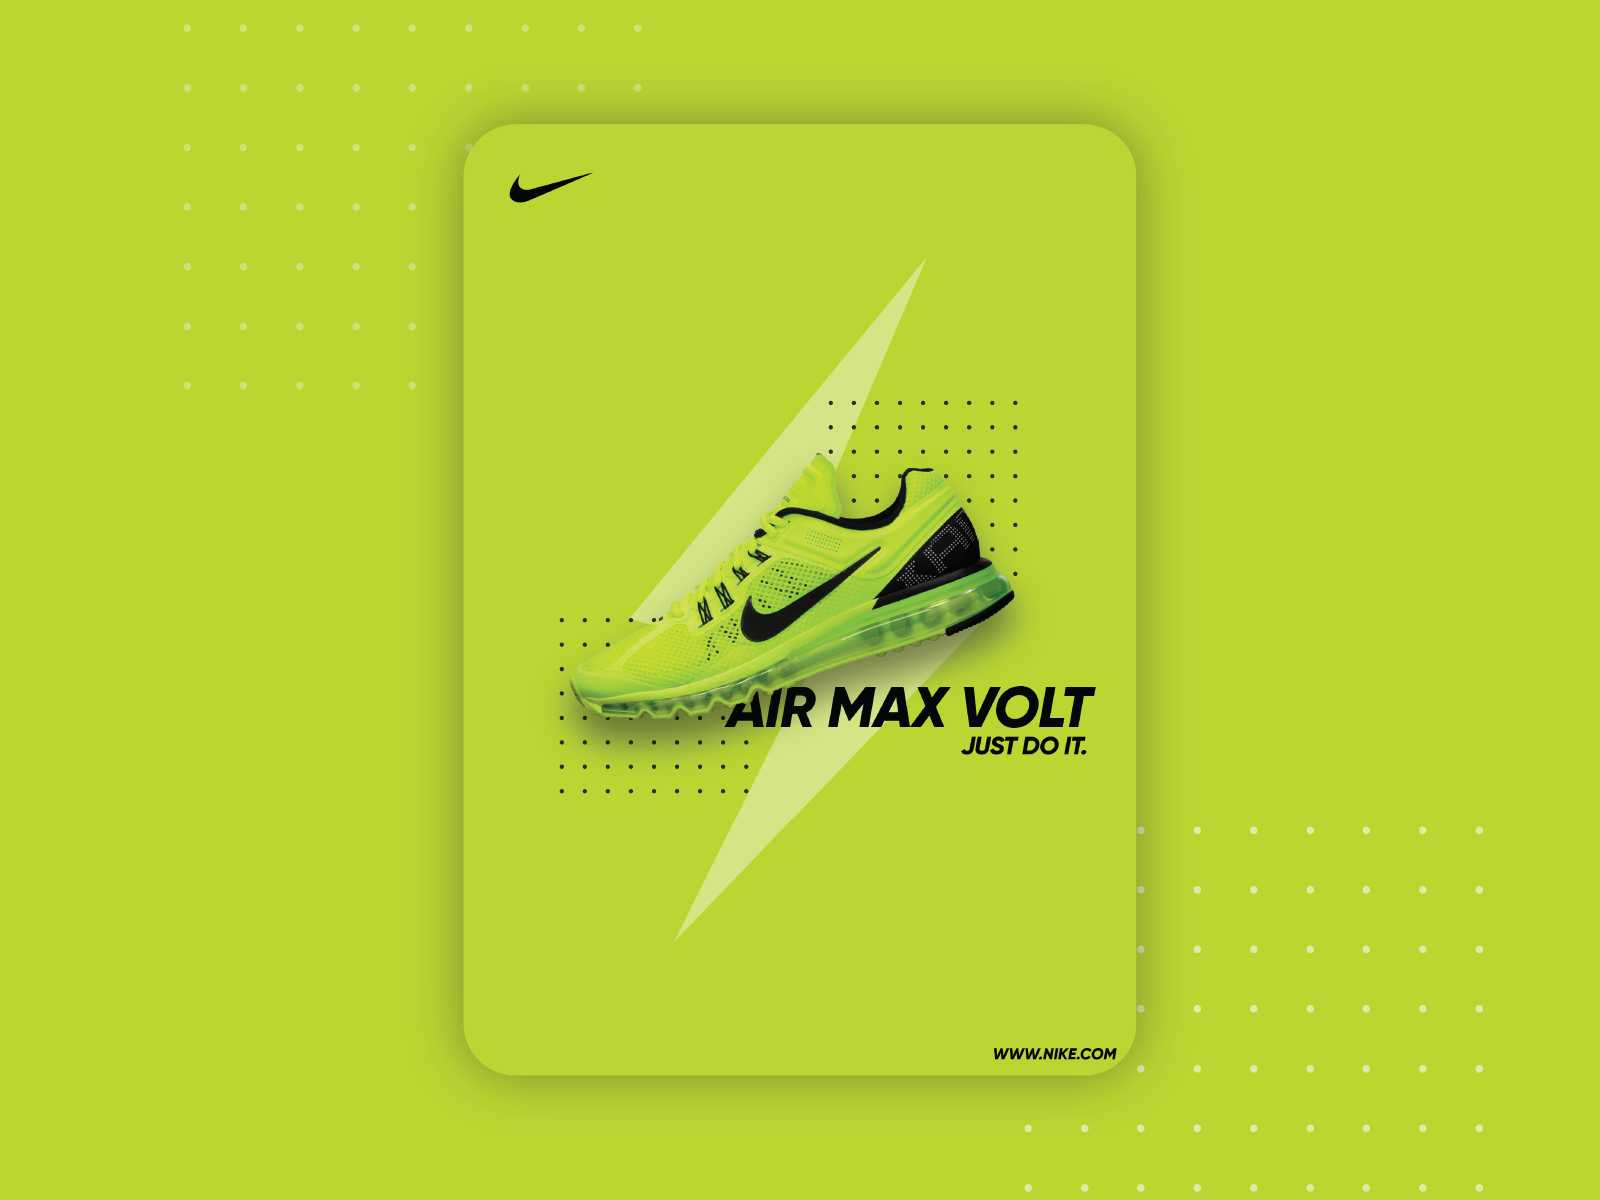 Nike shoes poster by Mandark Raval on Dribbble